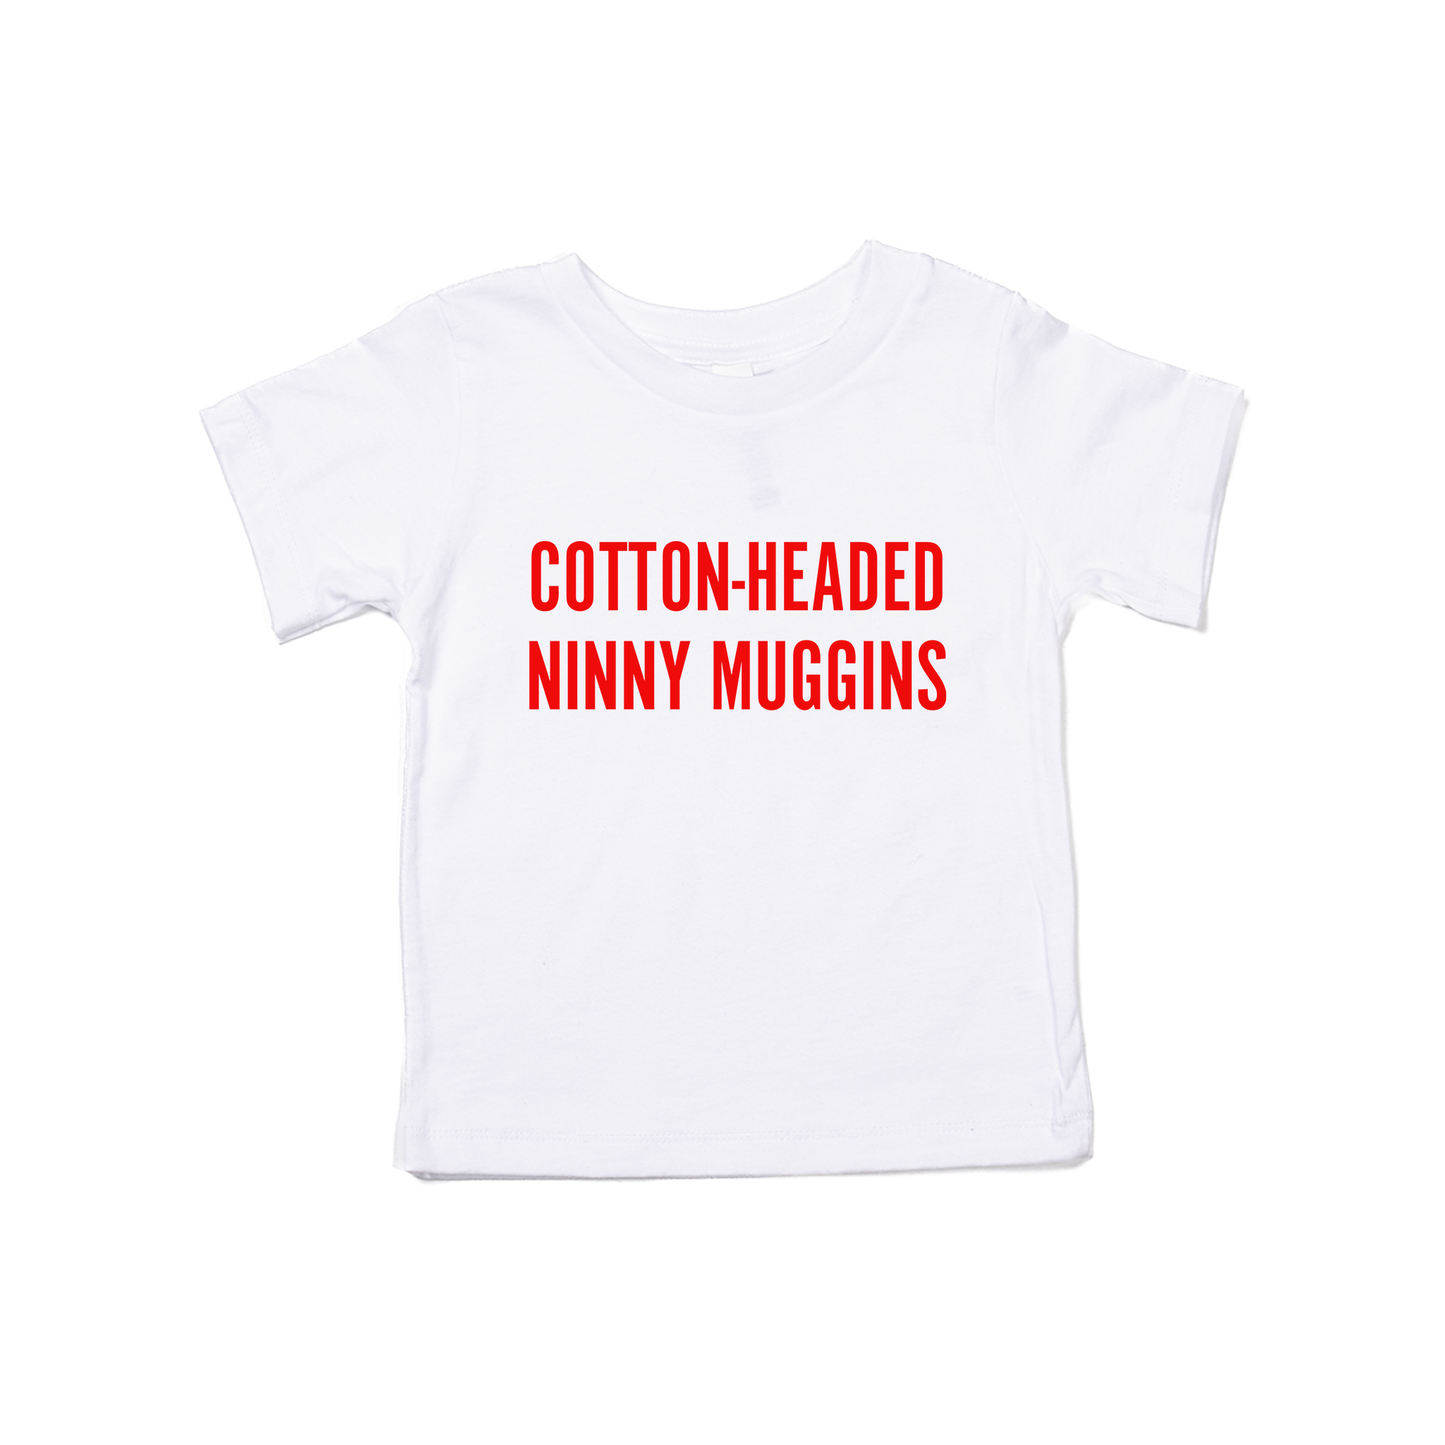 Cotton-Headed Ninny Muggins (Red) - Kids Tee (White)